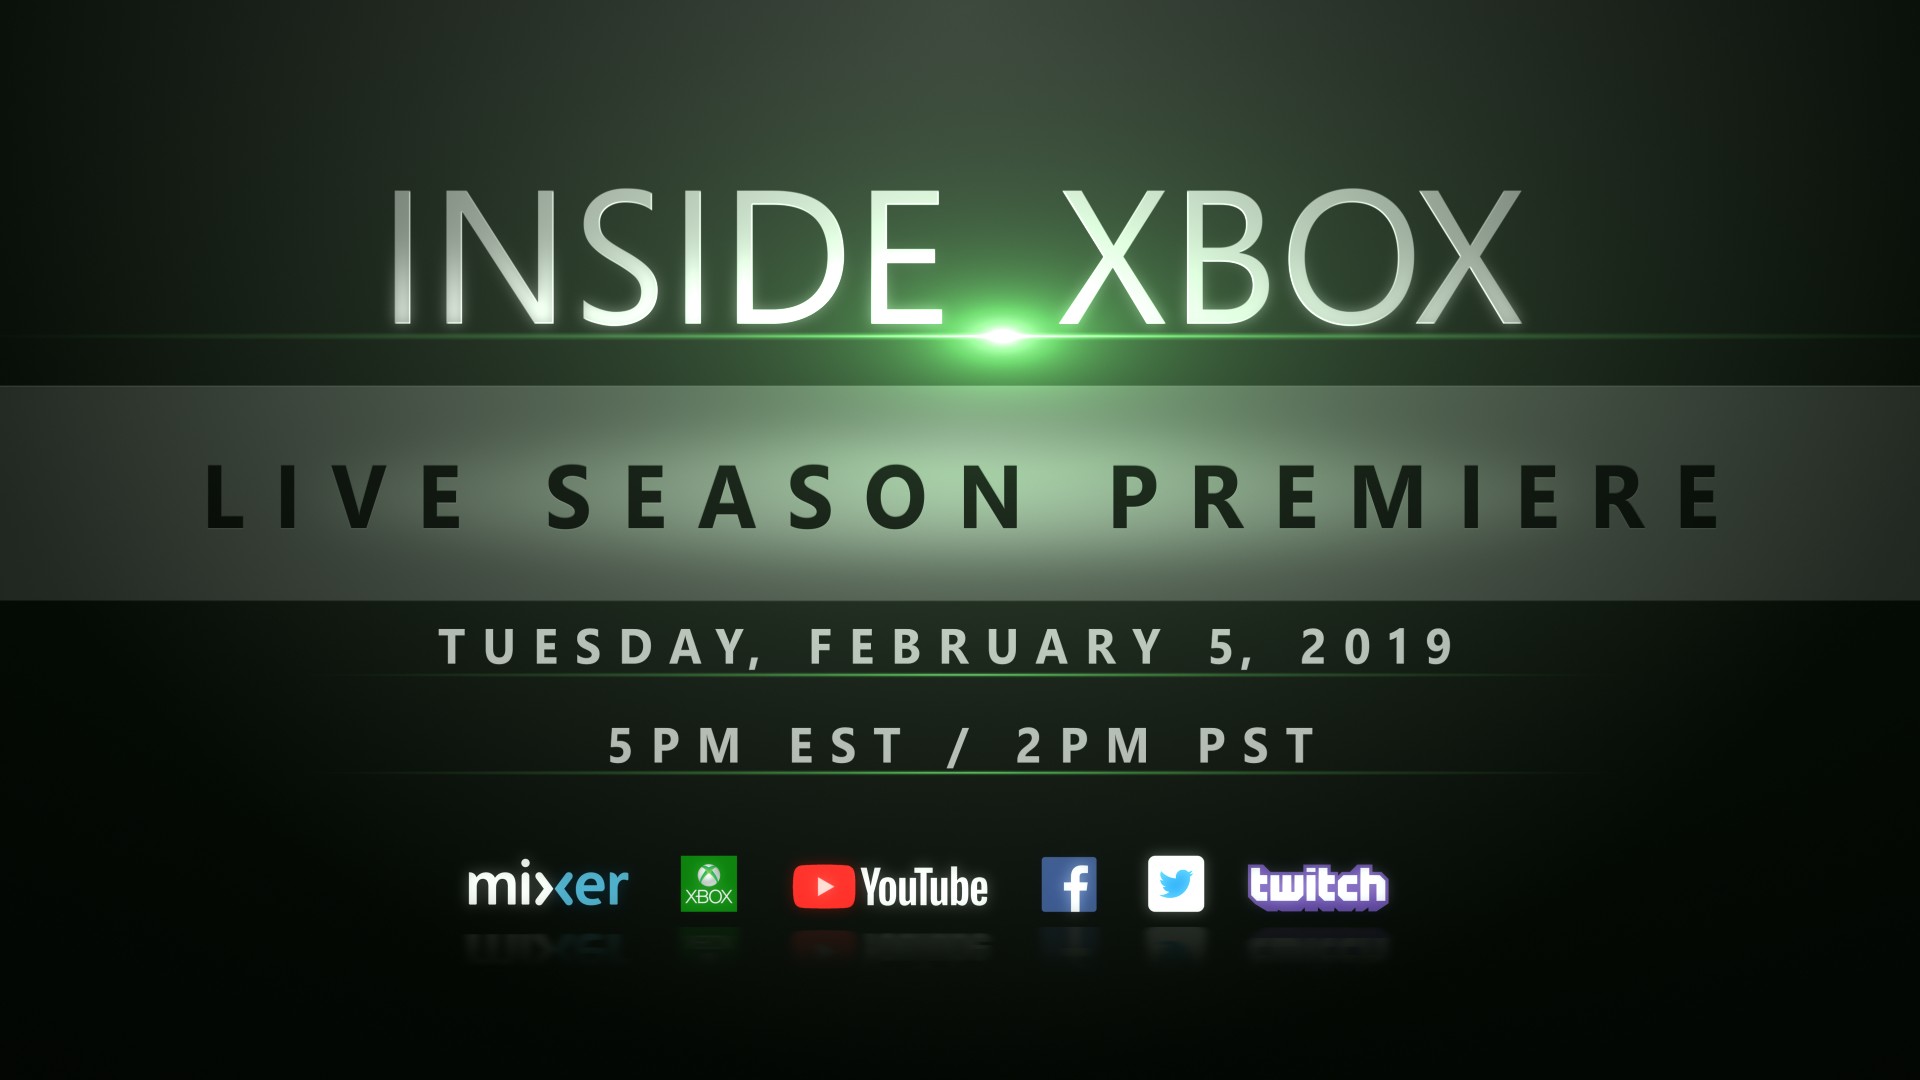 This Week on Xbox: April 5, 2019 2019_Feb05_Inside_Xbox_Promo1_Thumbnail_16x9_V2.jpg